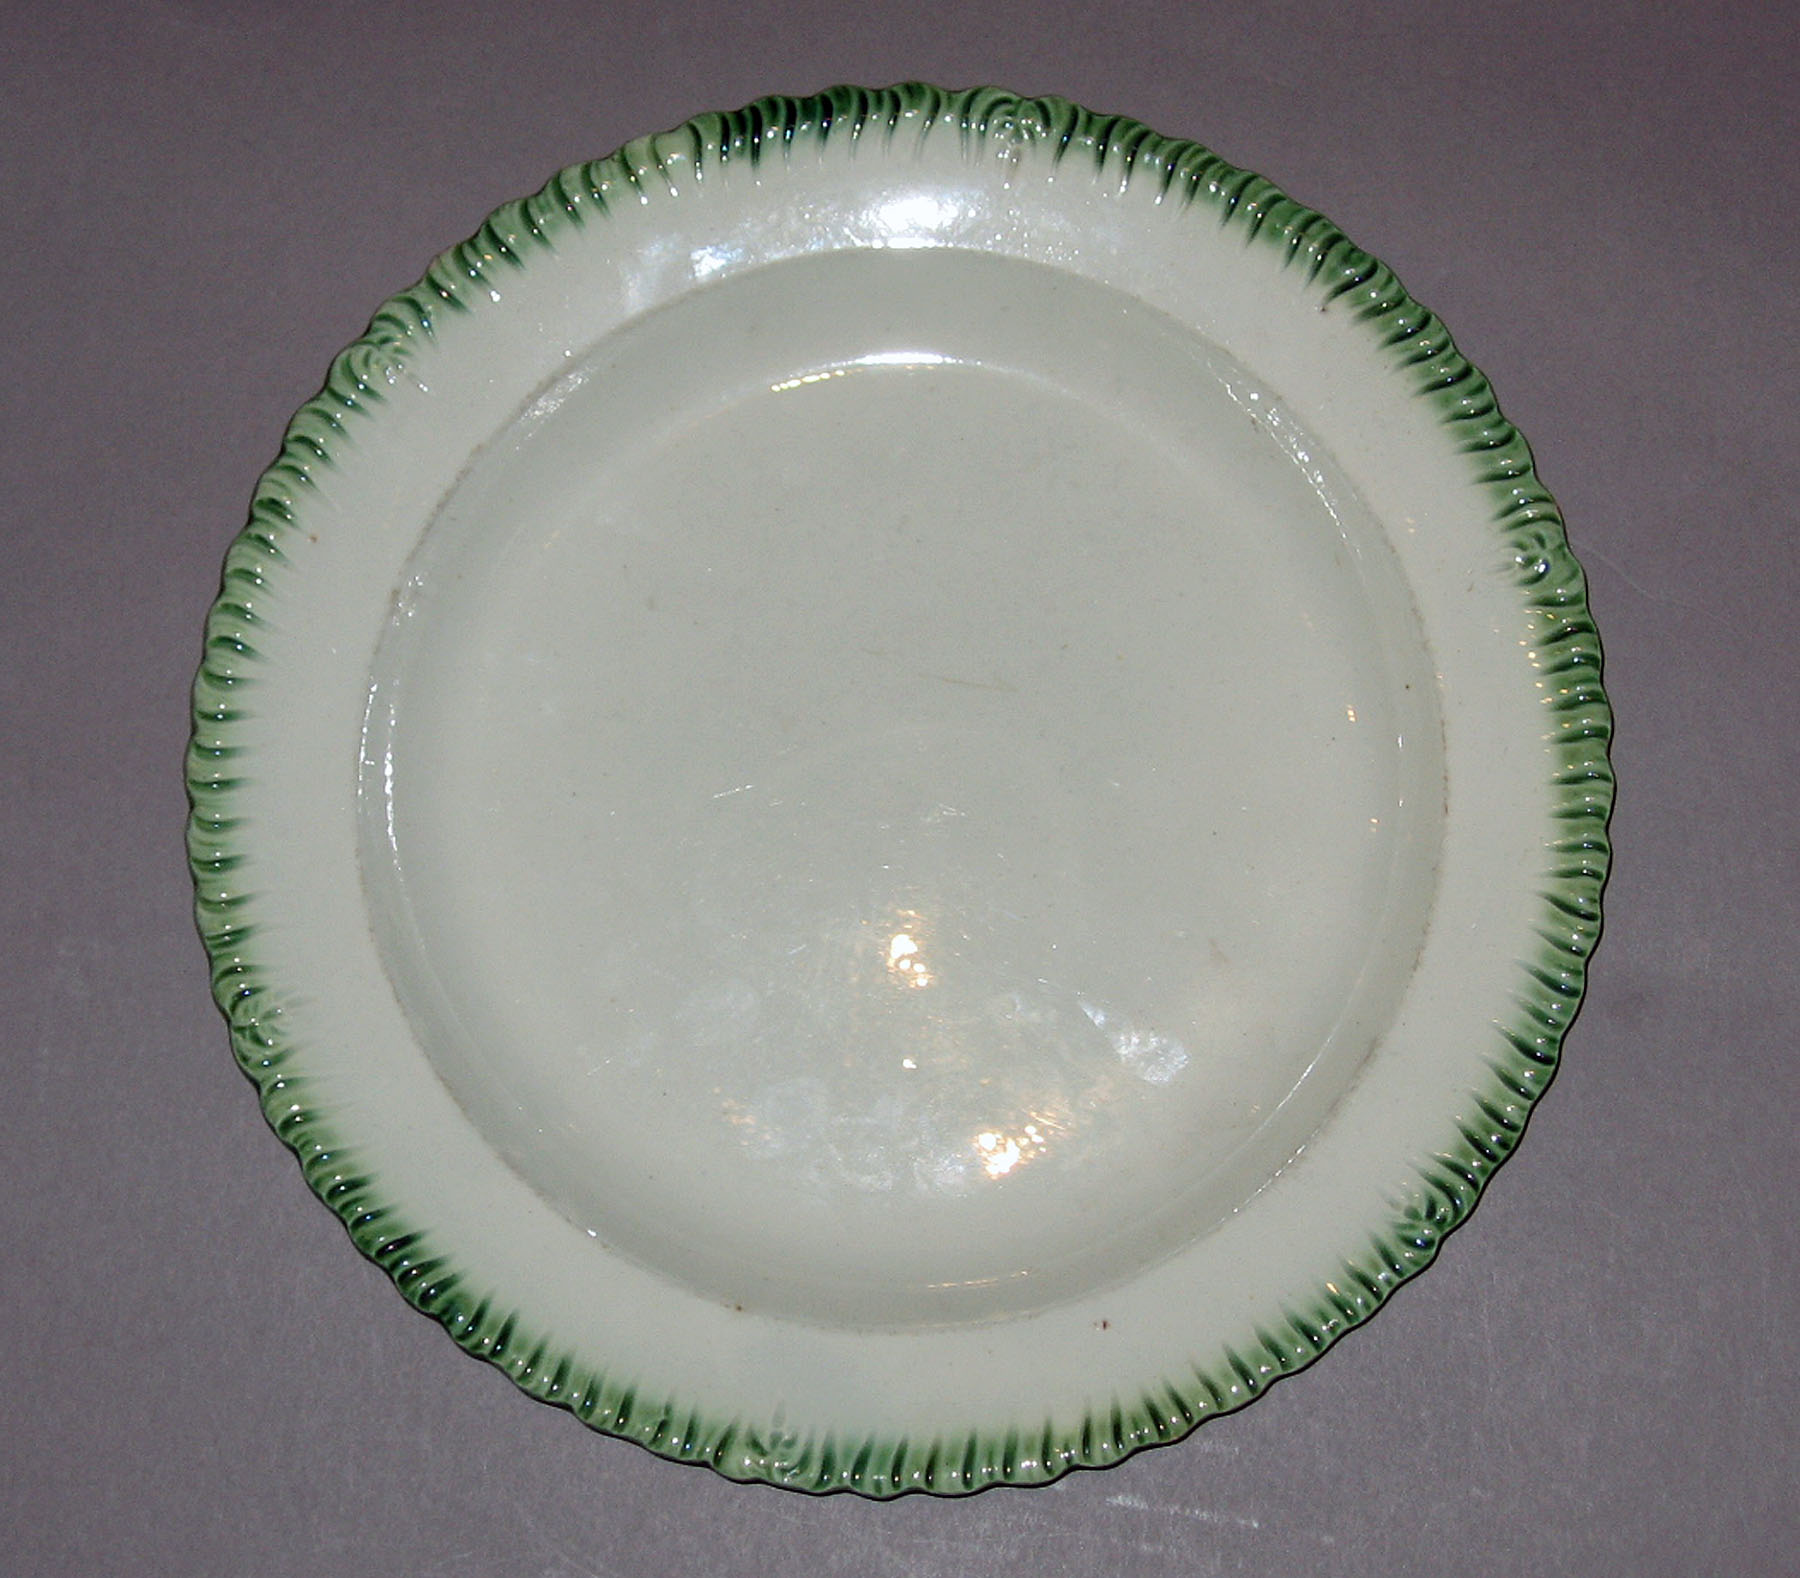 1969.0337.009 Davenport pearlware plate